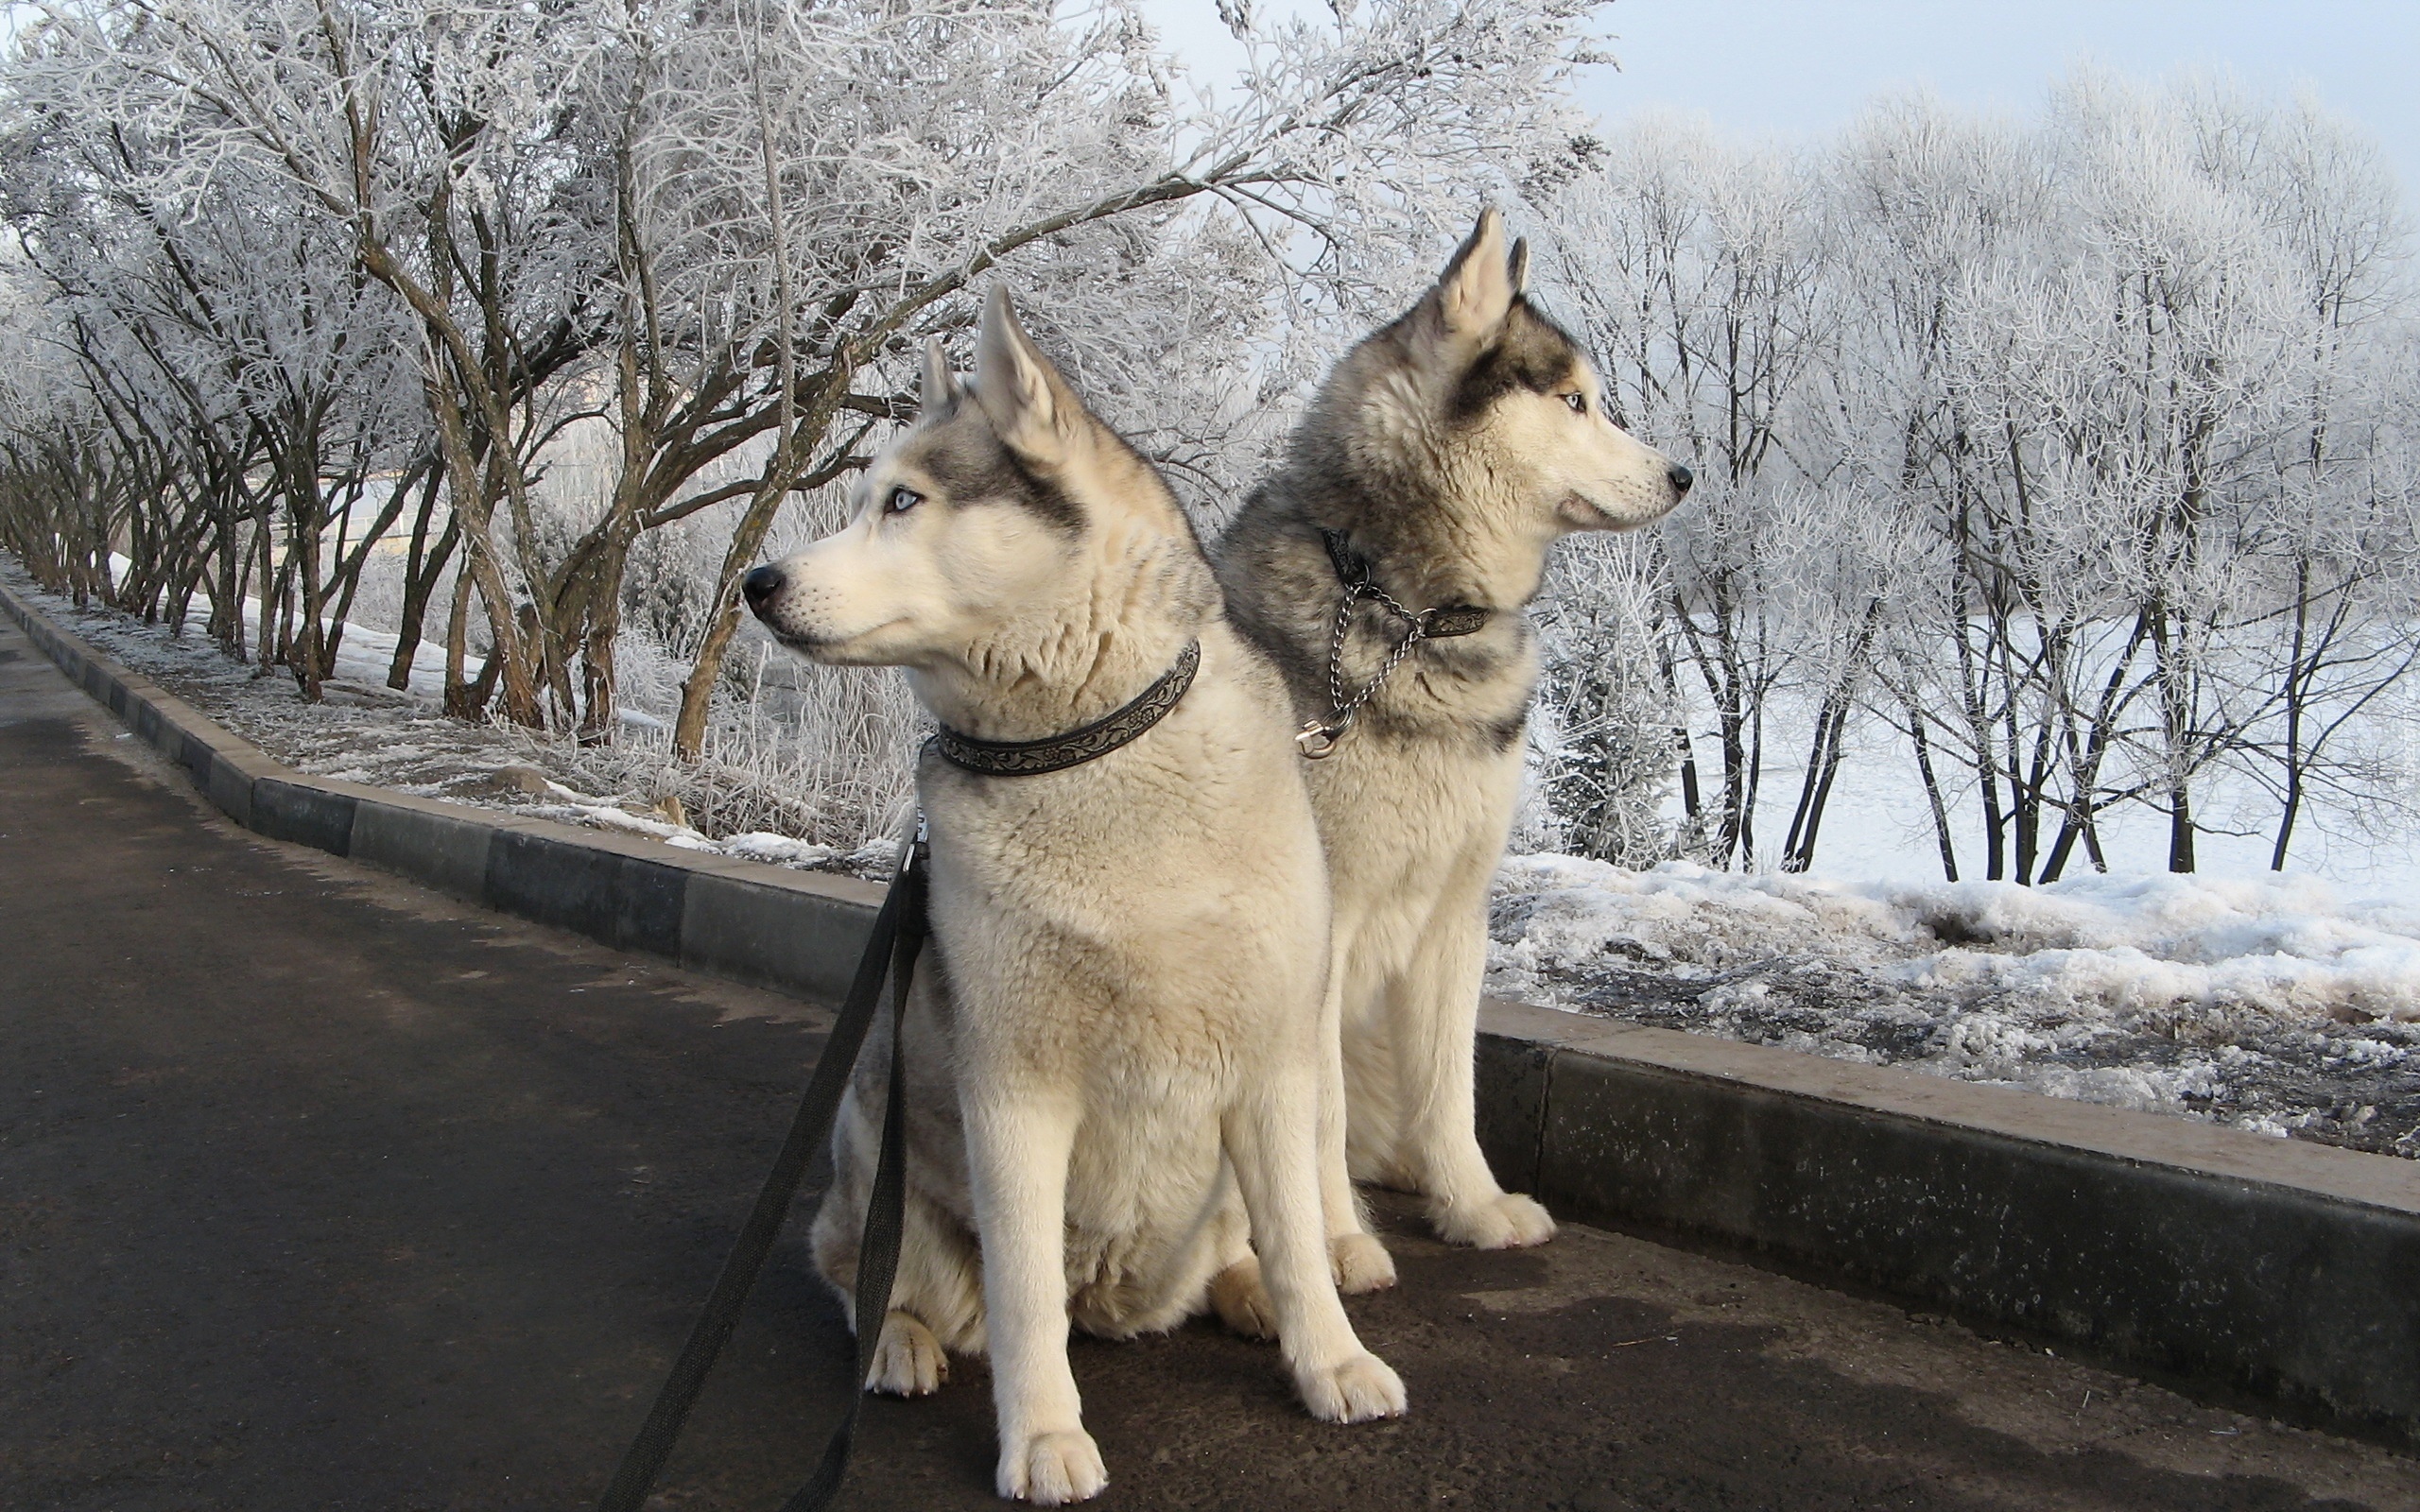 Psy, Śnieg, Zima, Siberian Husky